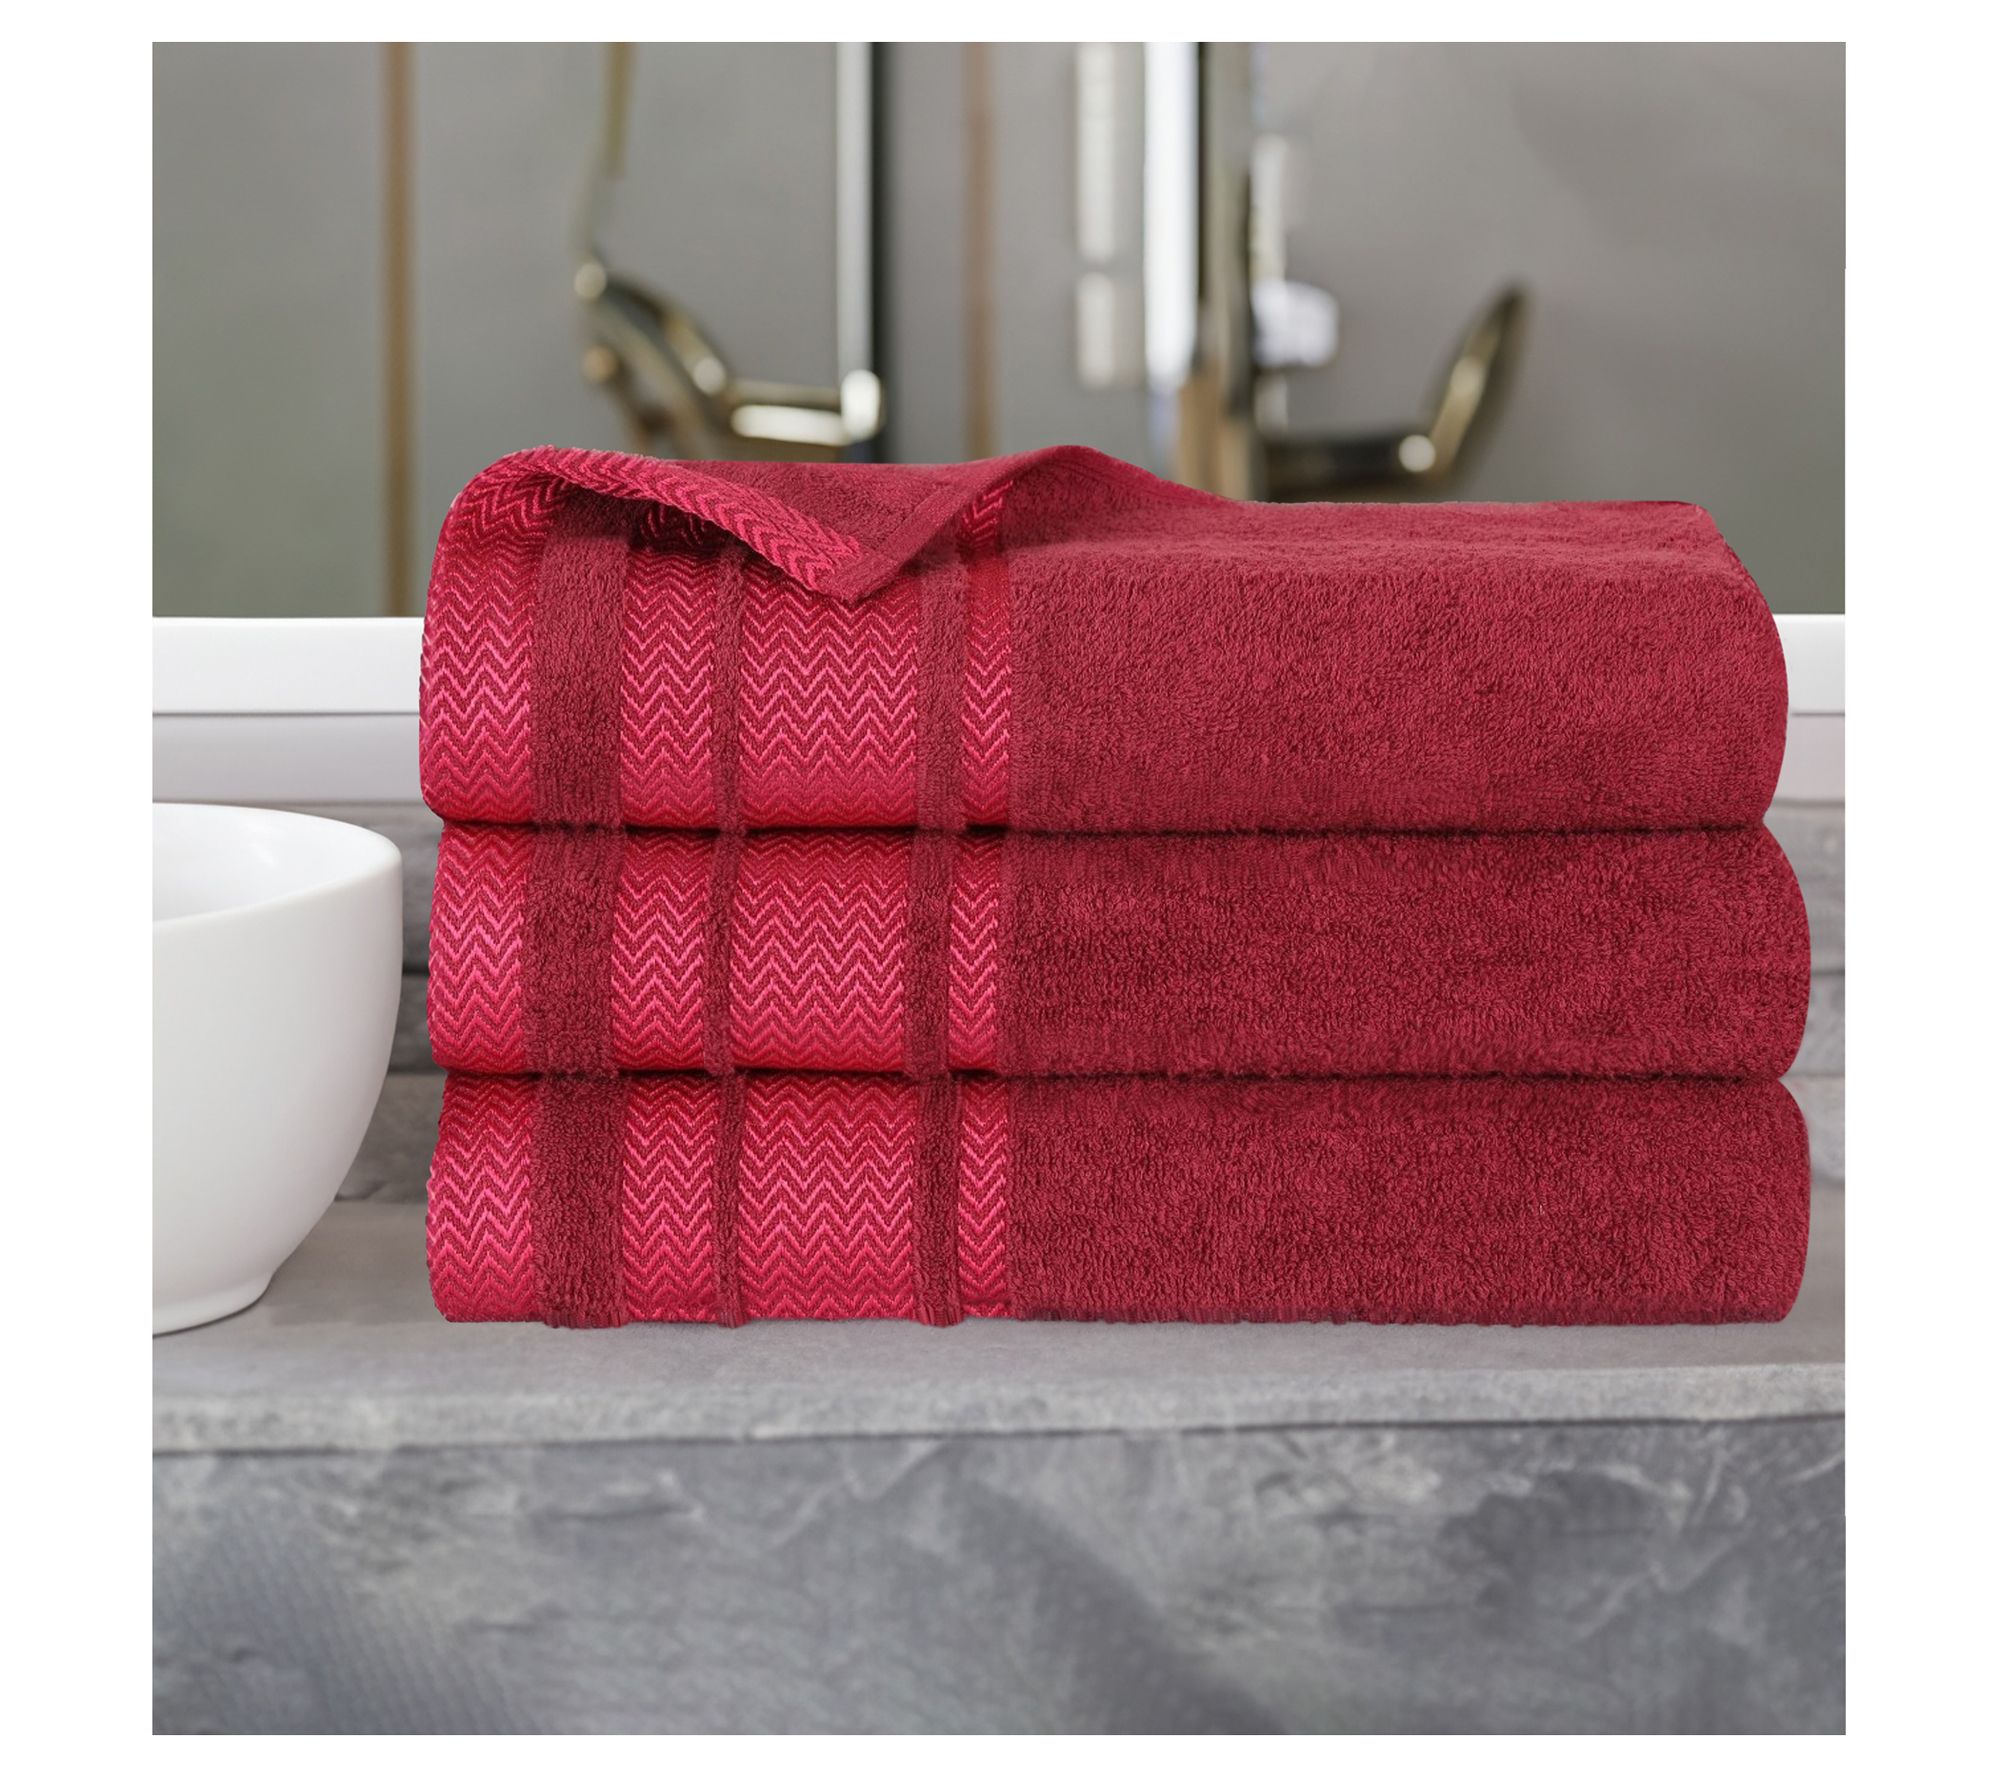 American Soft Linen Bath Towel Set 100% Turkish Cotton 3 Piece Towels for Bathroom- Burgundy Red